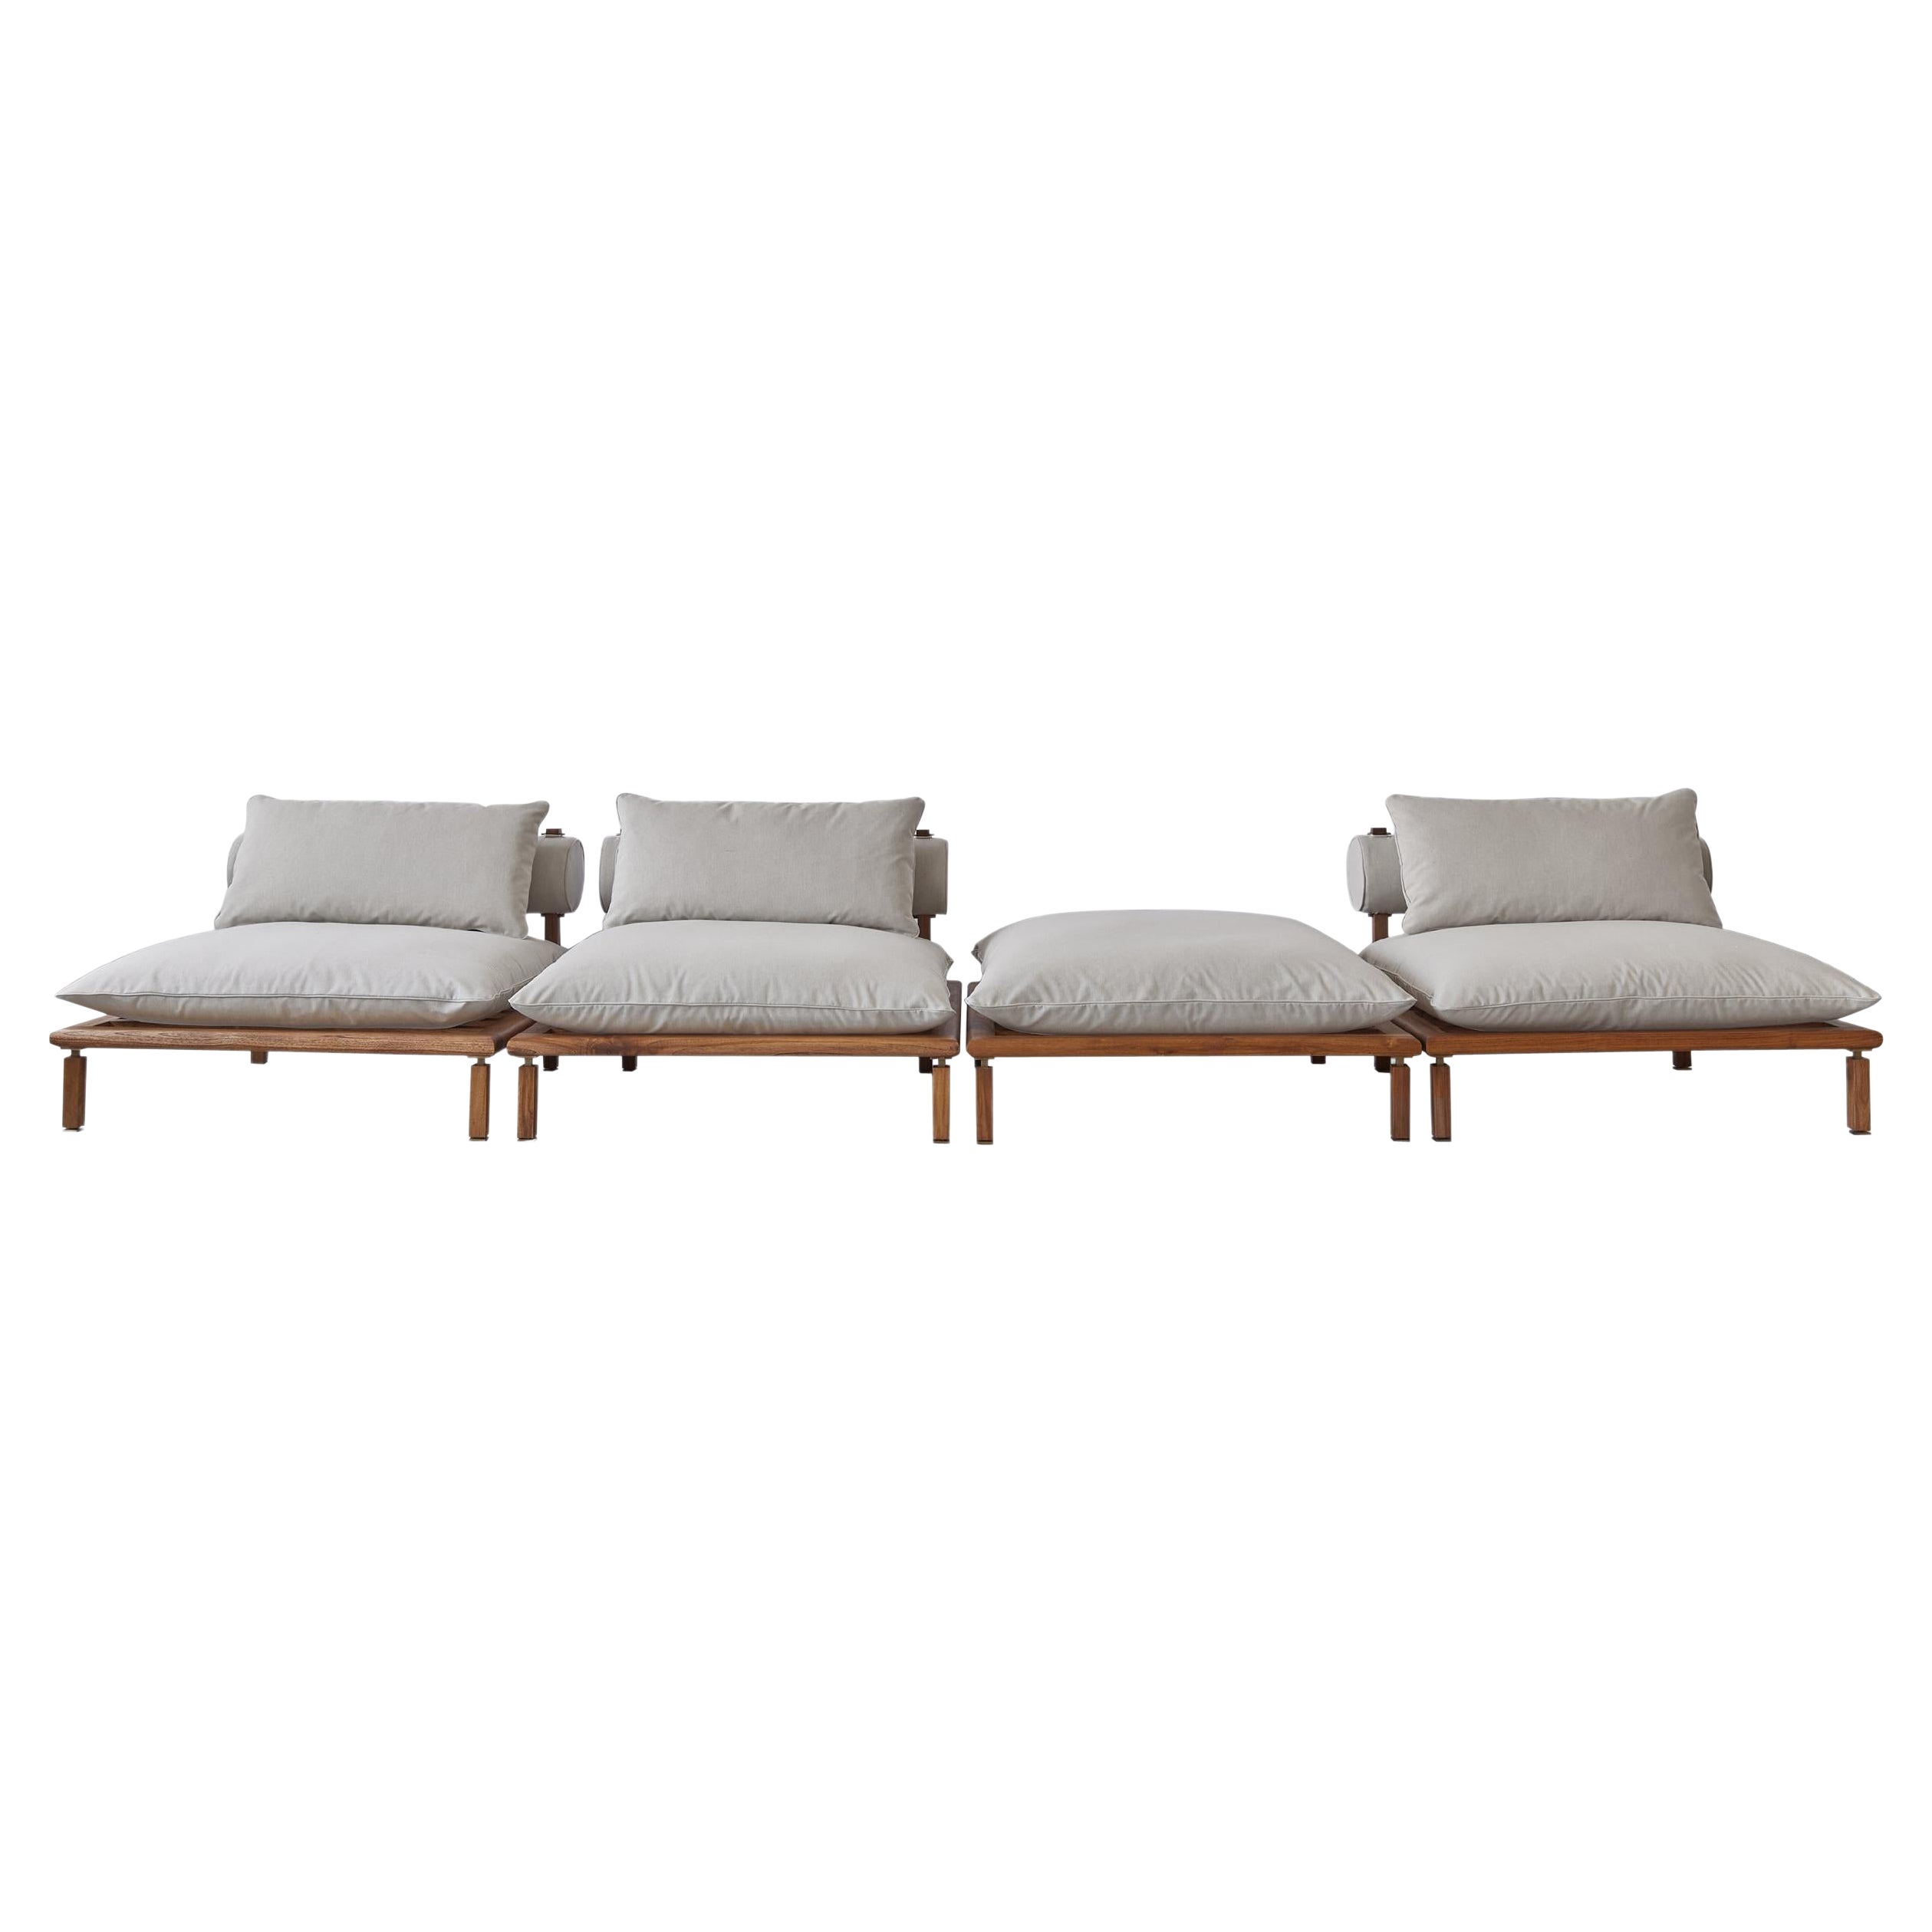 Nerthus Outdoor Sofa by Atra Design For Sale